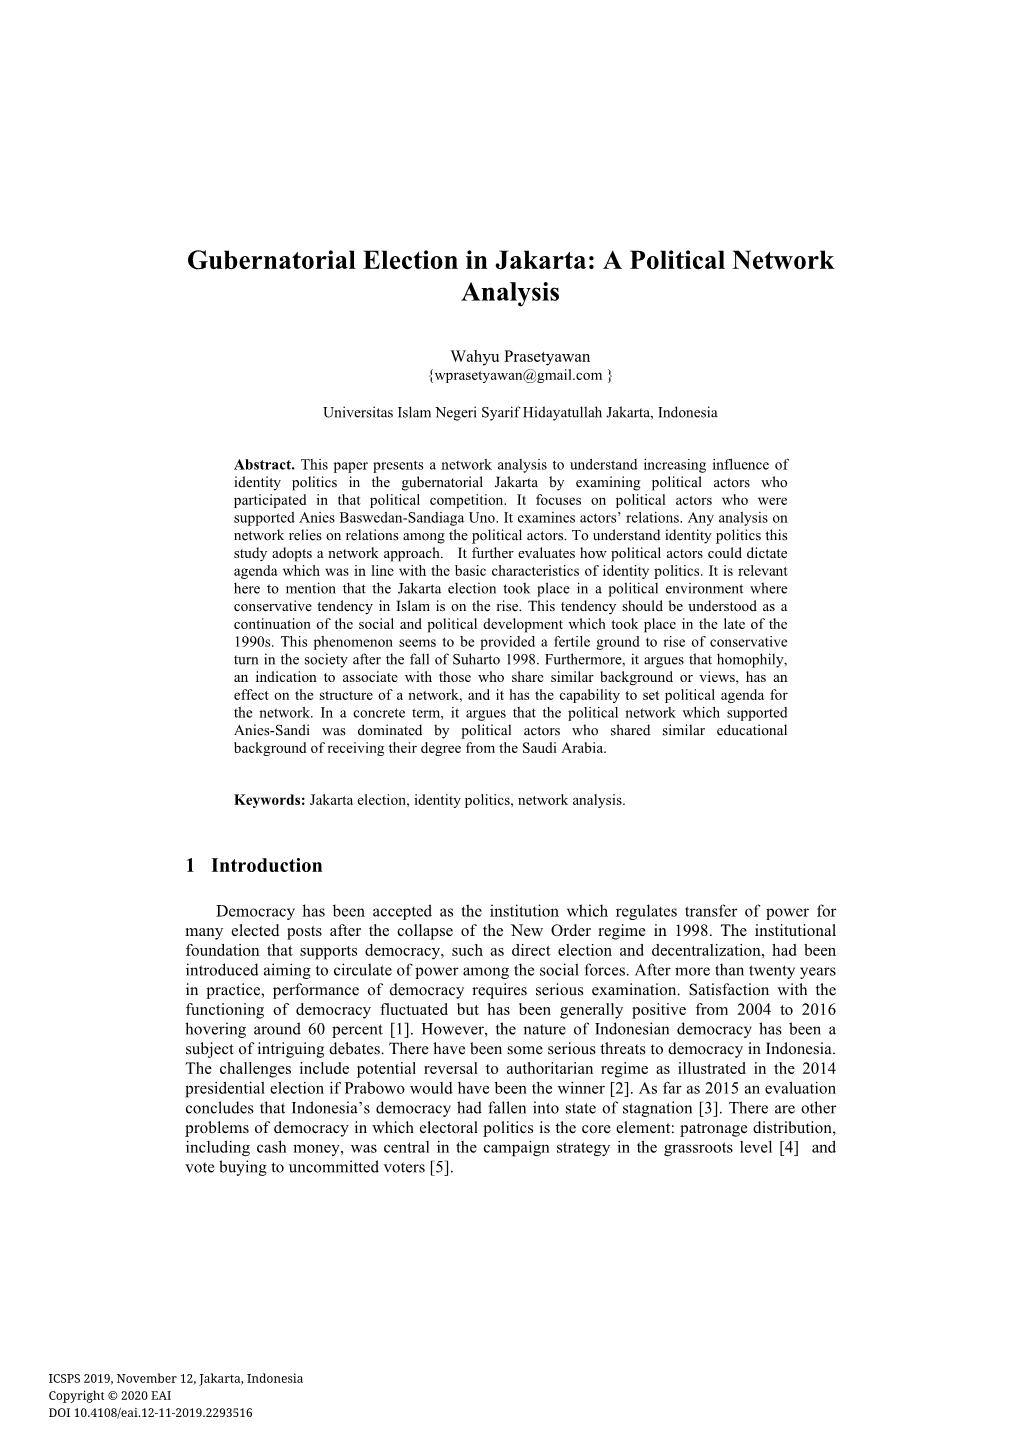 Gubernatorial Election in Jakarta: a Political Network Analysis